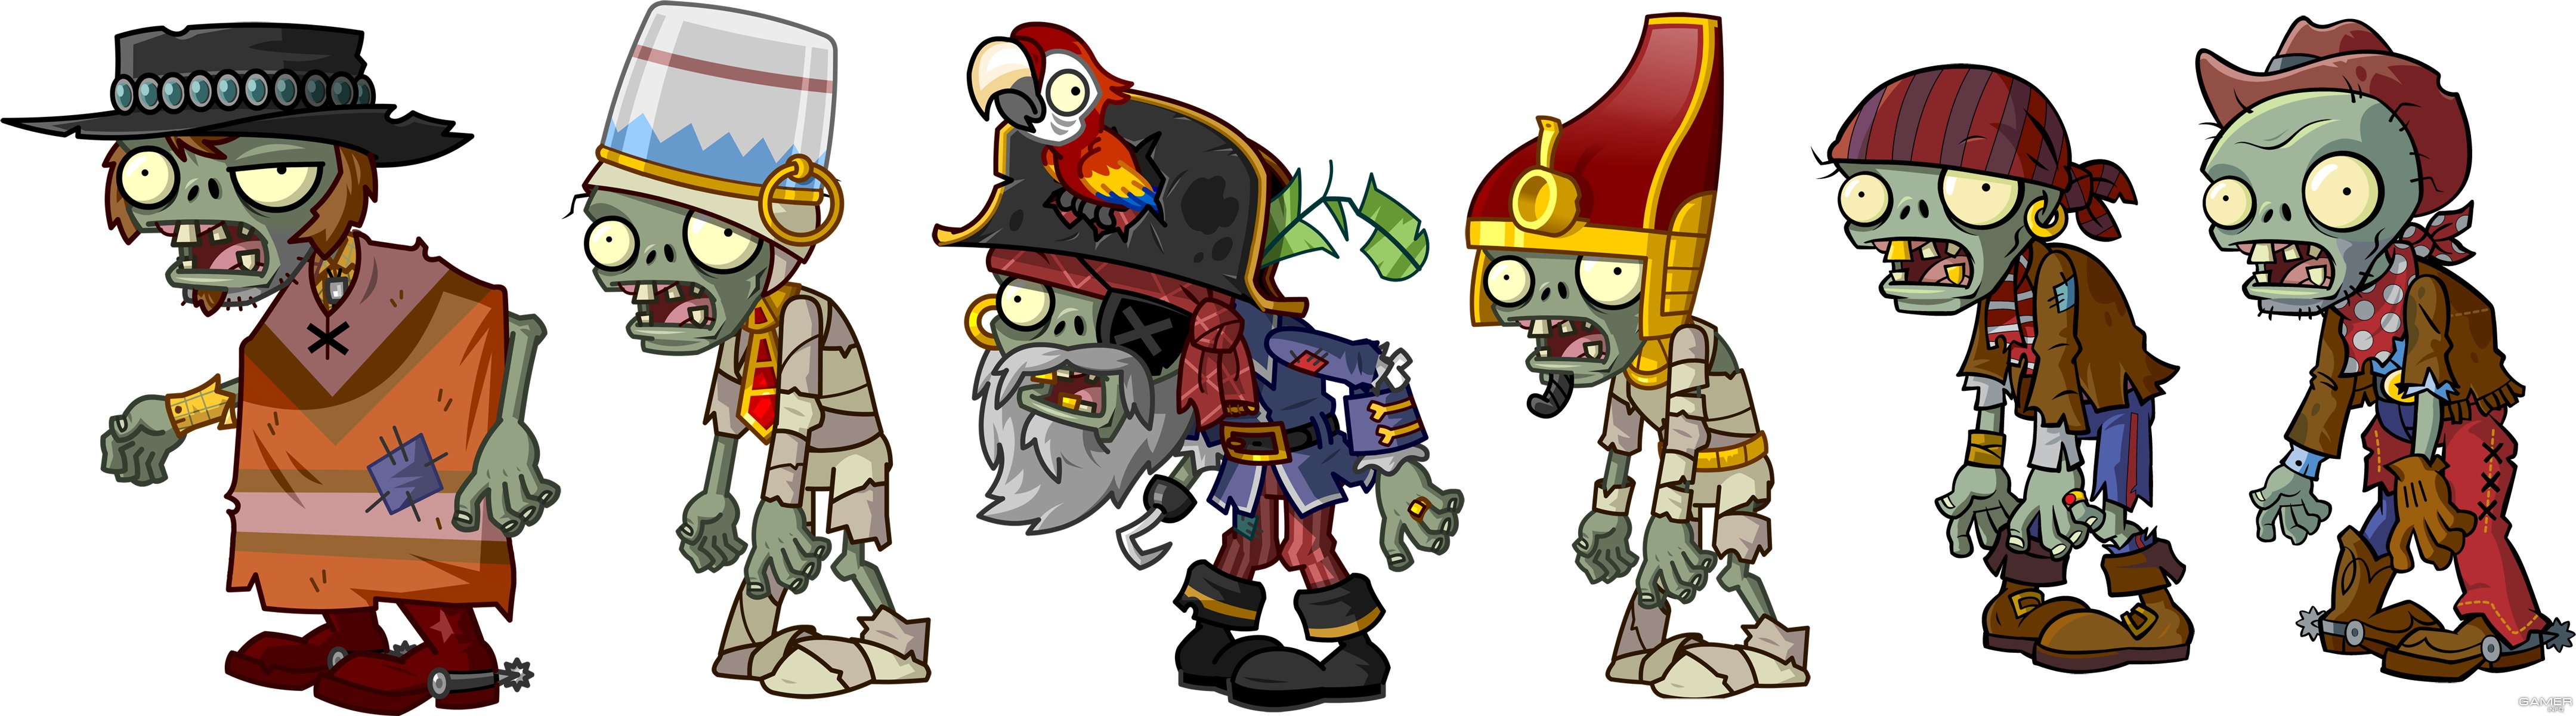 plants vs zombies 3 characters